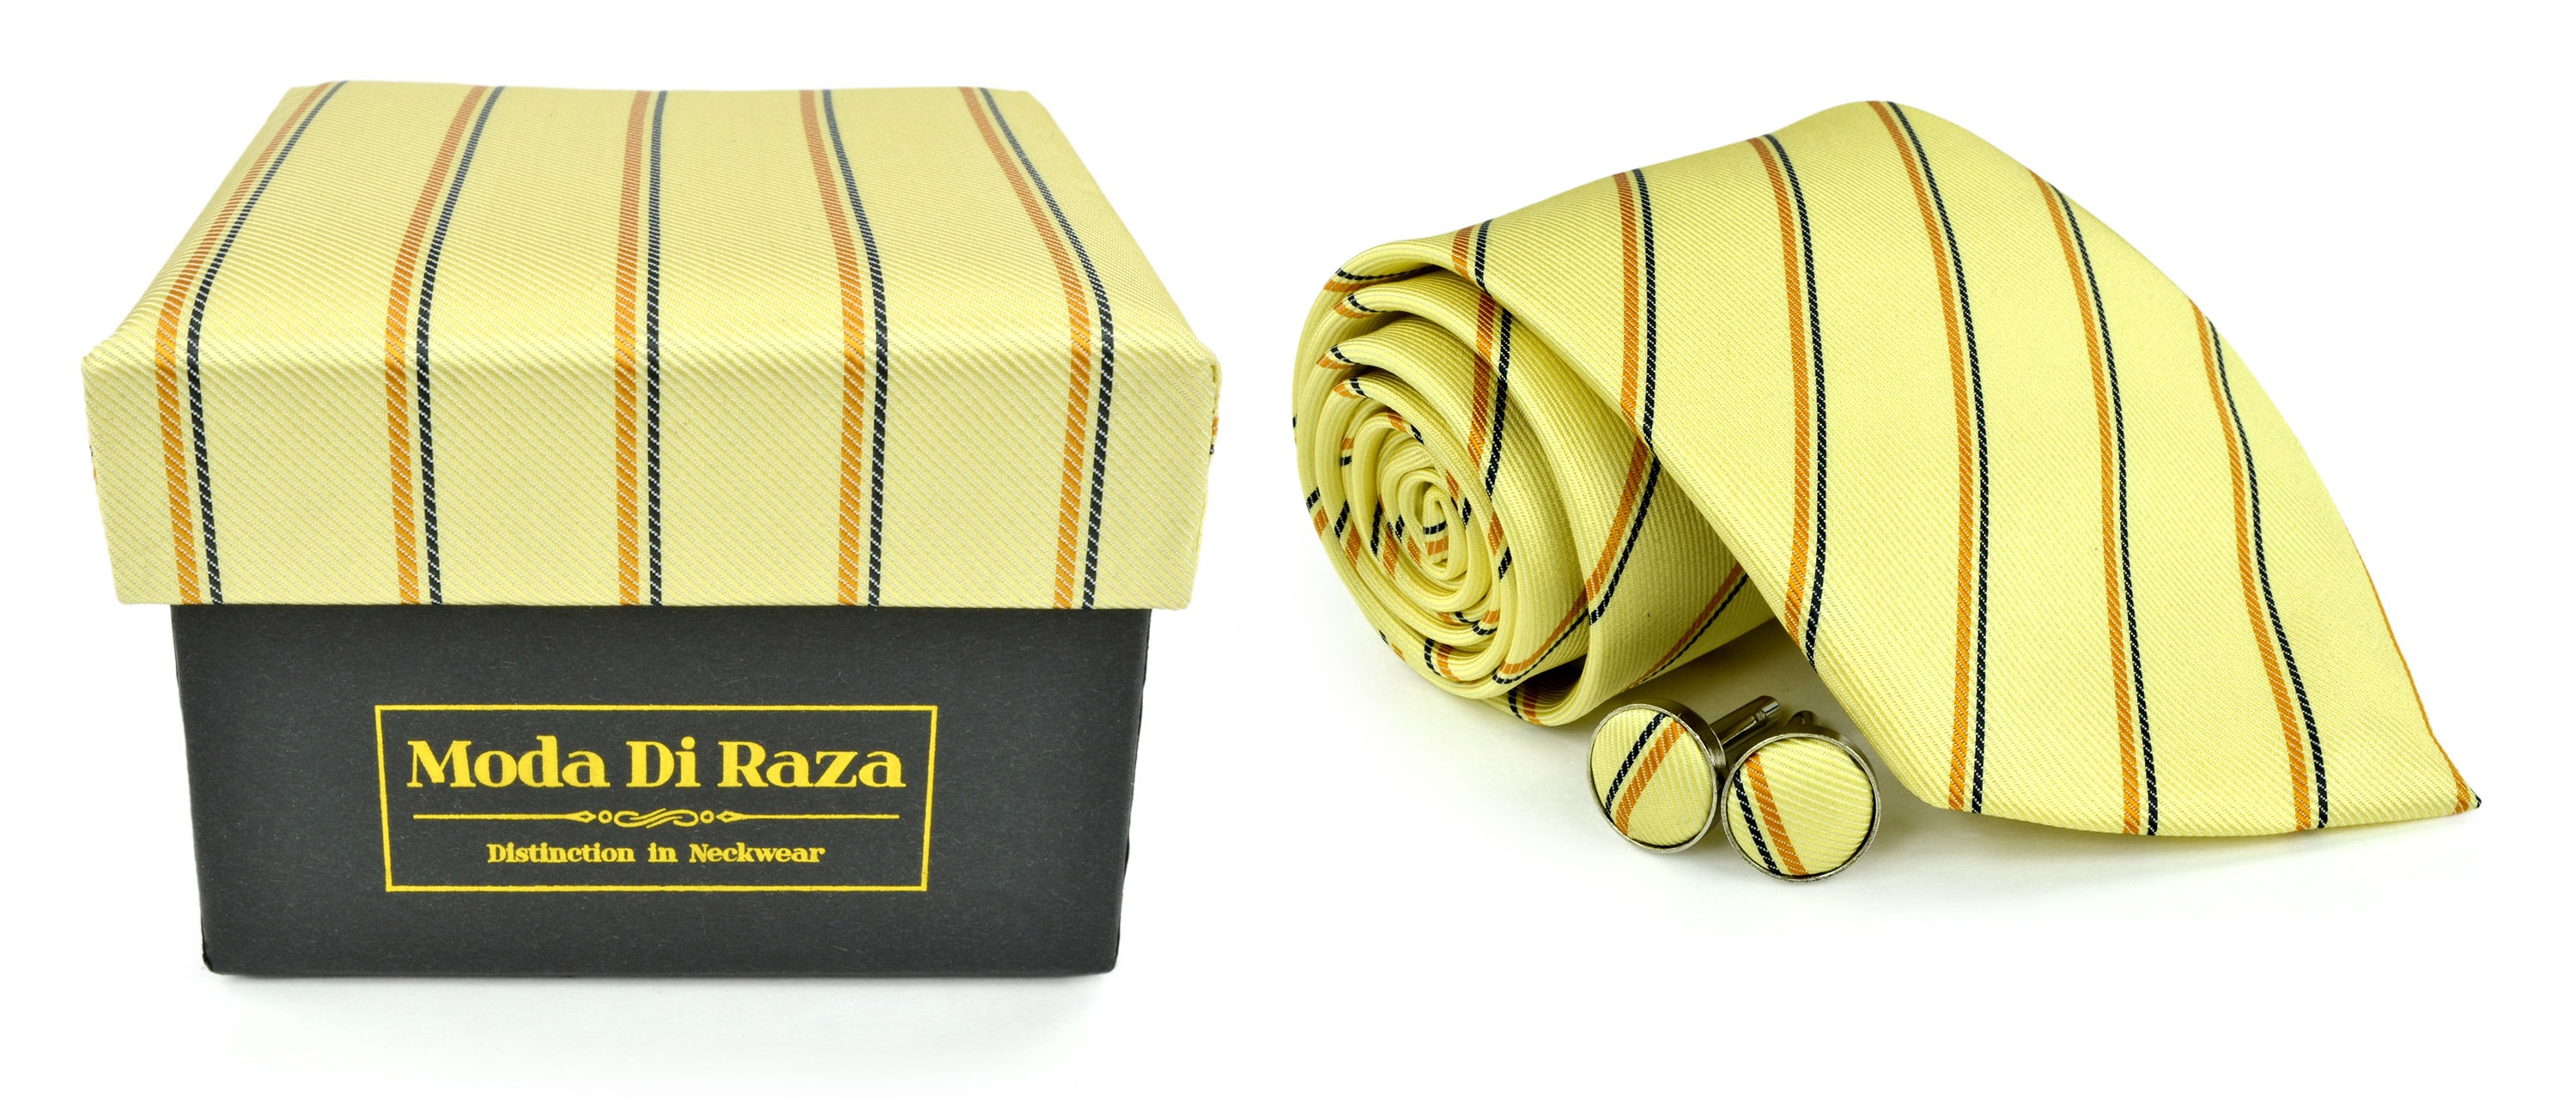 Moda Di Raza Men's NeckTie 3.0 With Cufflink n Gift Box Wedding Formal Events - Banana